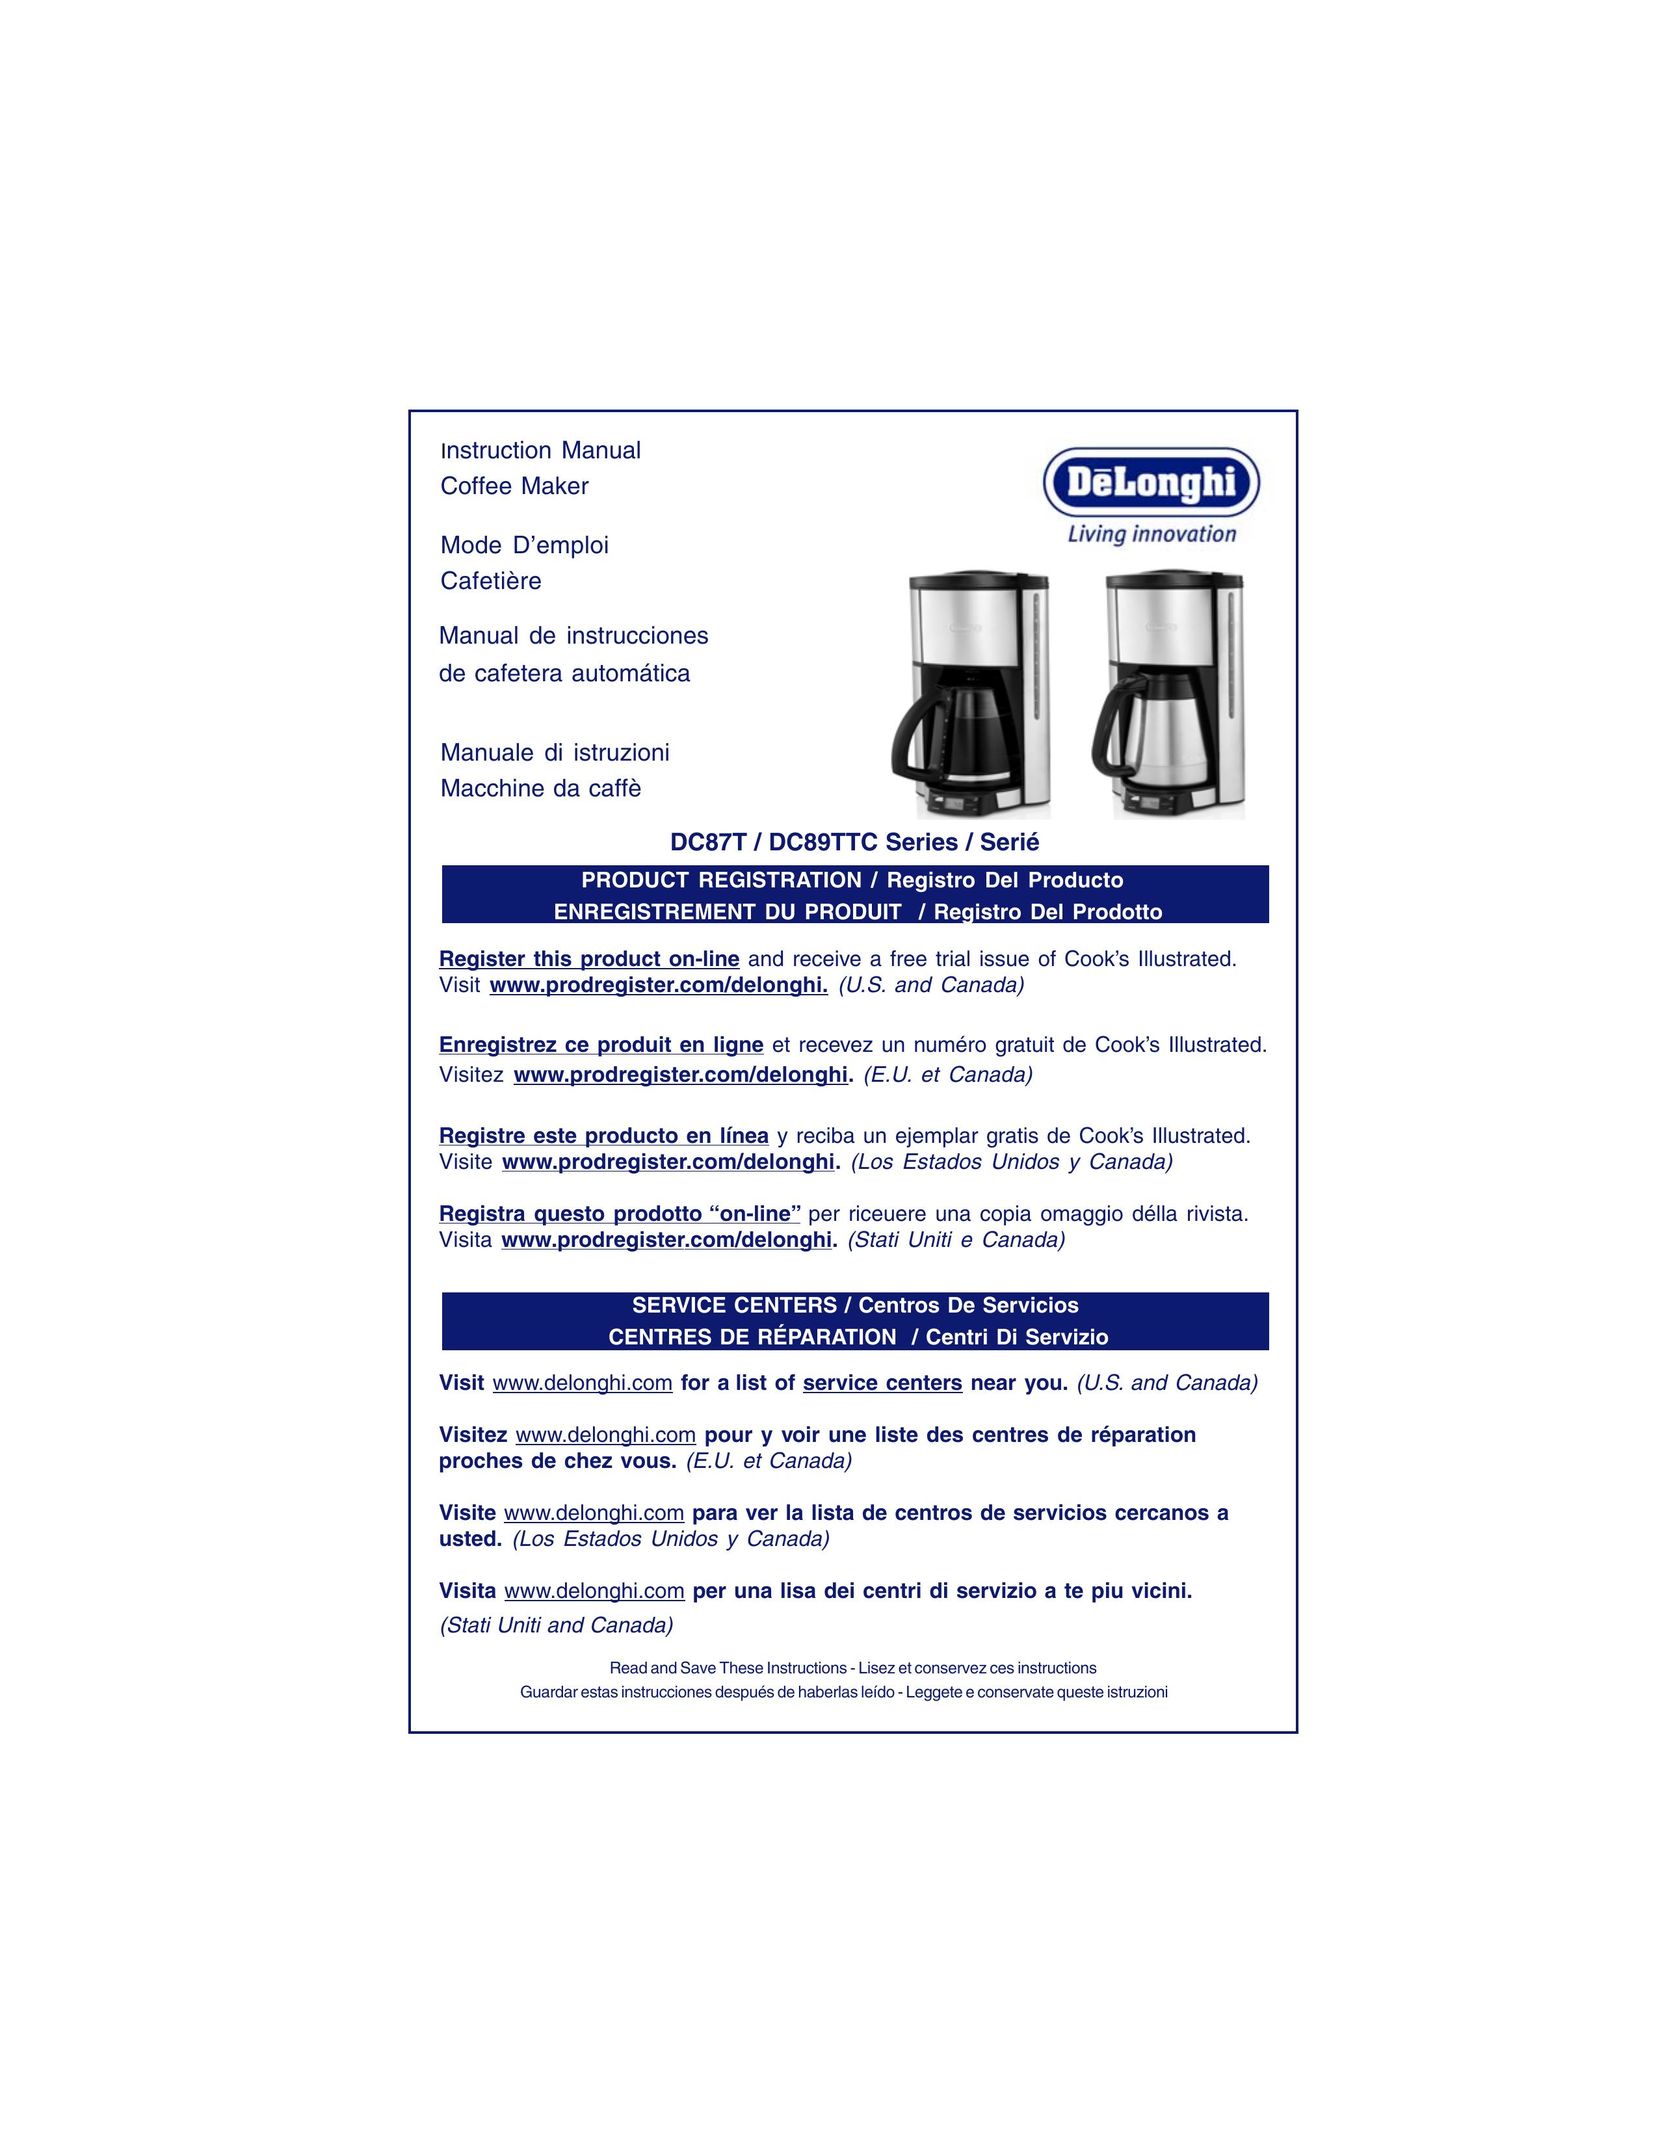 DeLonghi DC89TTC Series Coffeemaker User Manual